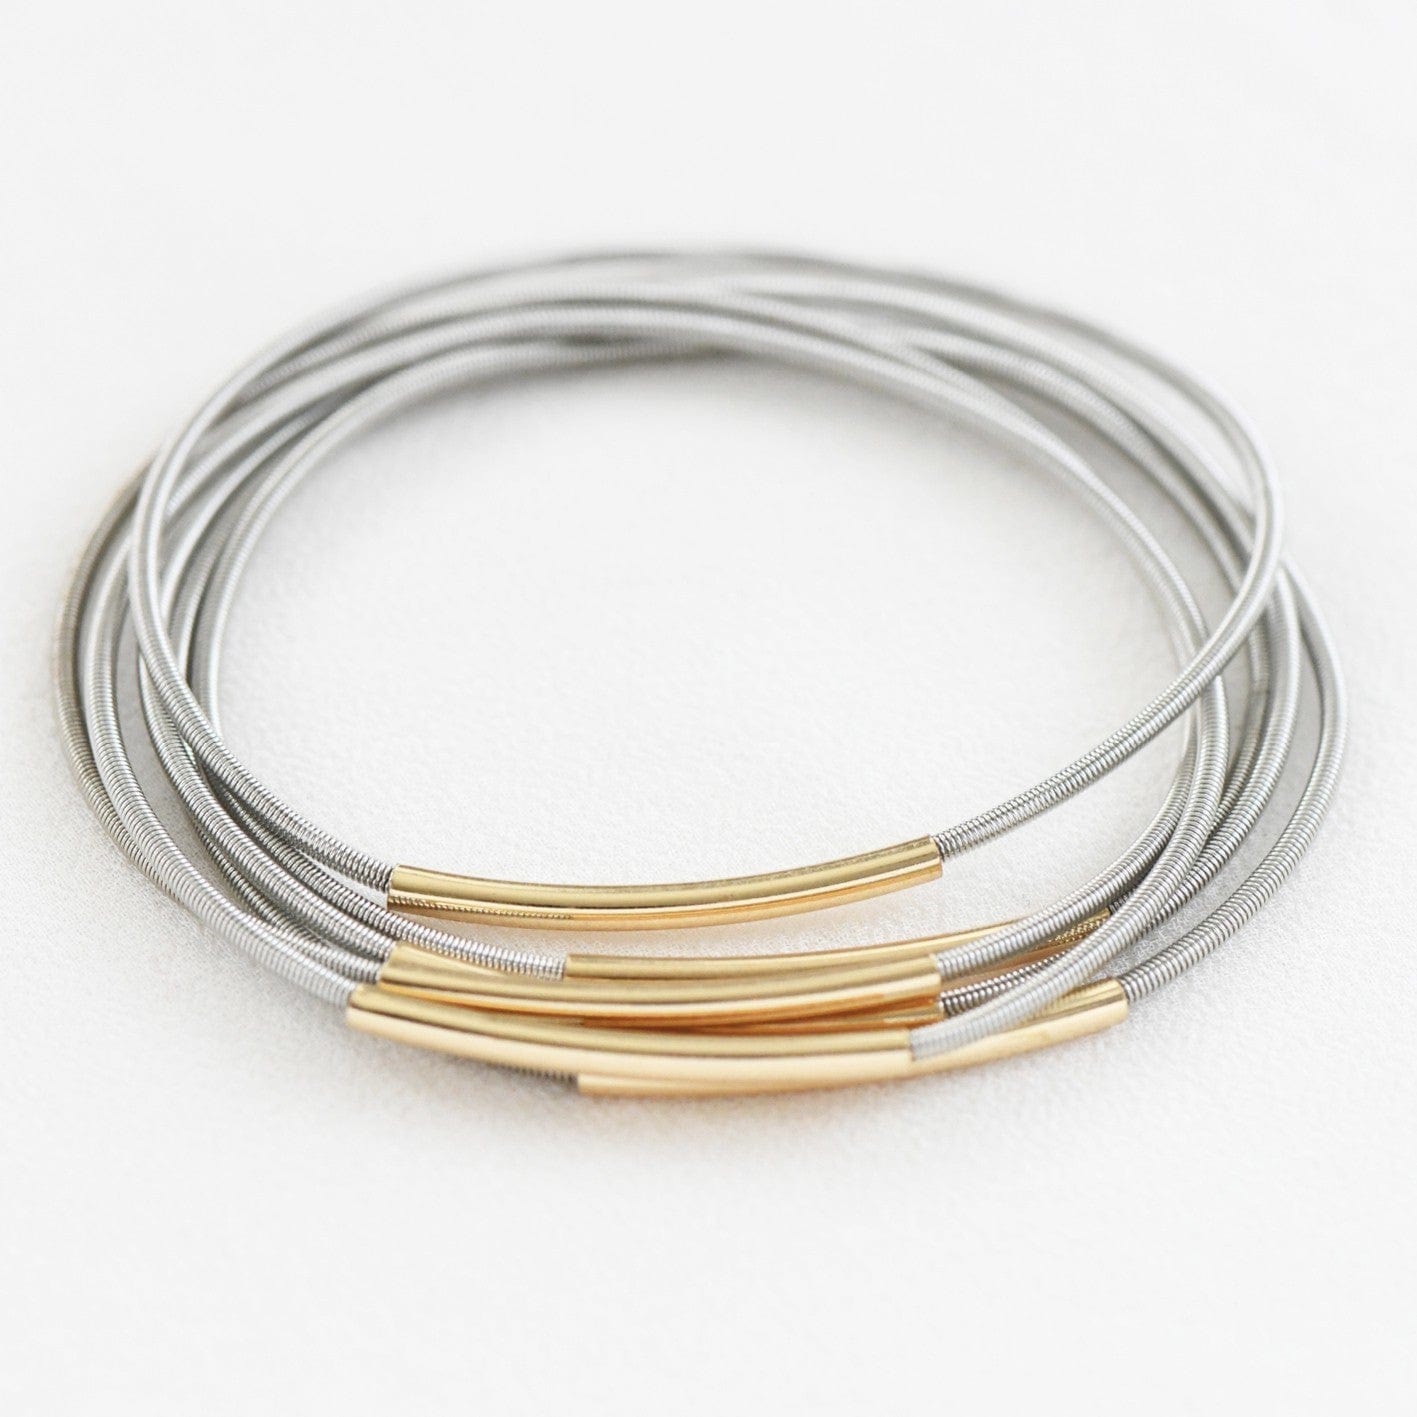 MIA ACCESSORIES Jewelry - Bracelets Stretchy Layered Guitar String Bracelet Set In Silver